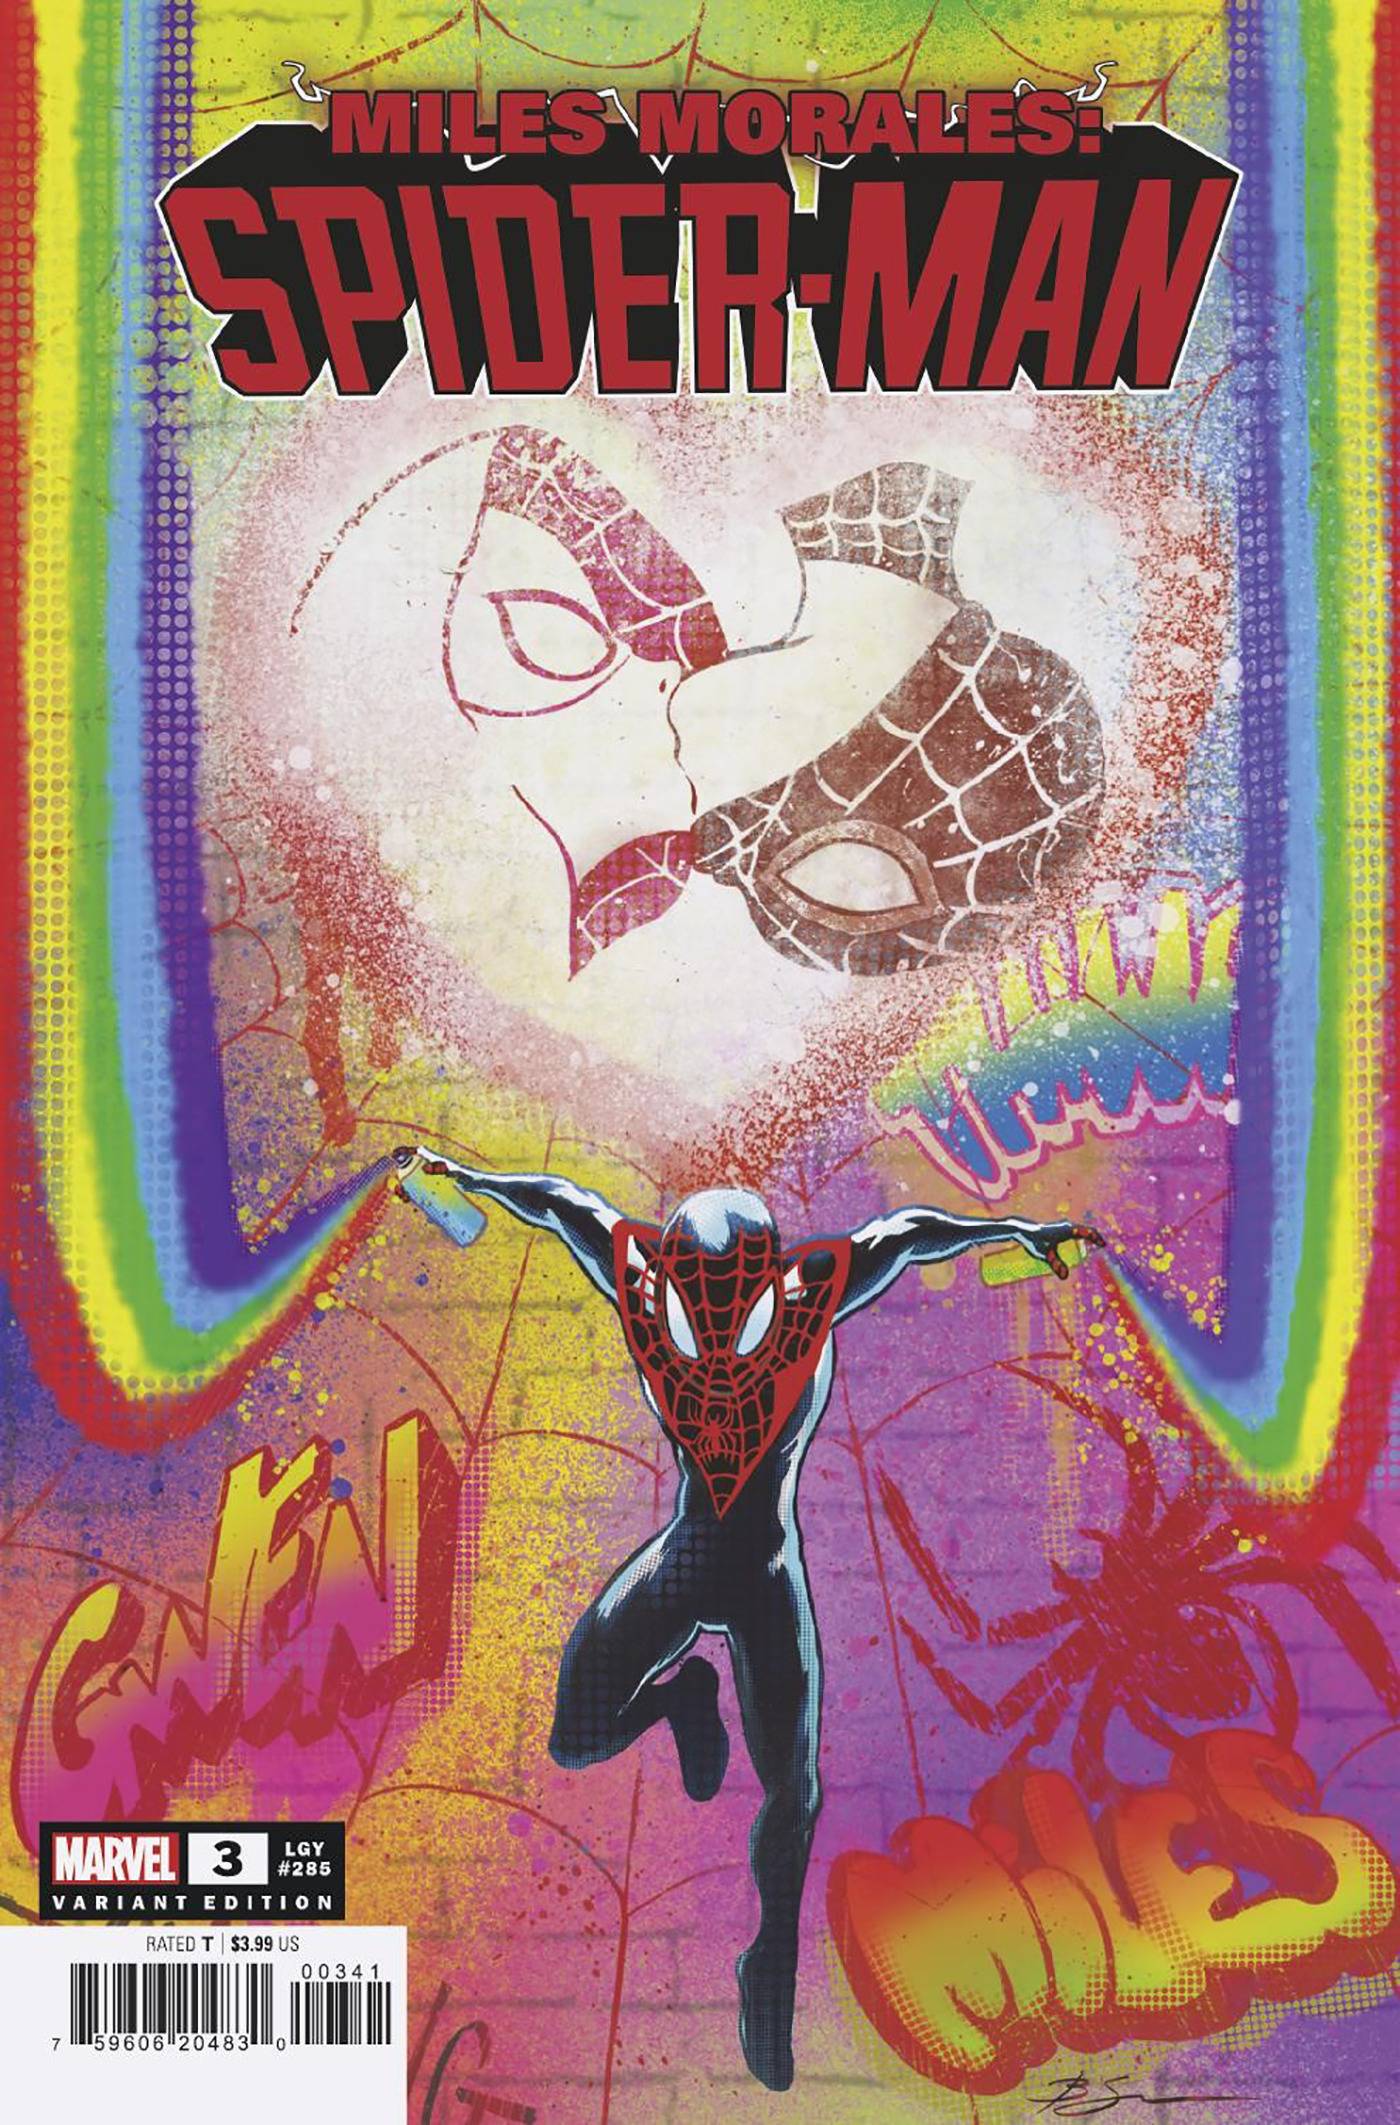 MILES MORALES SPIDER-MAN #3